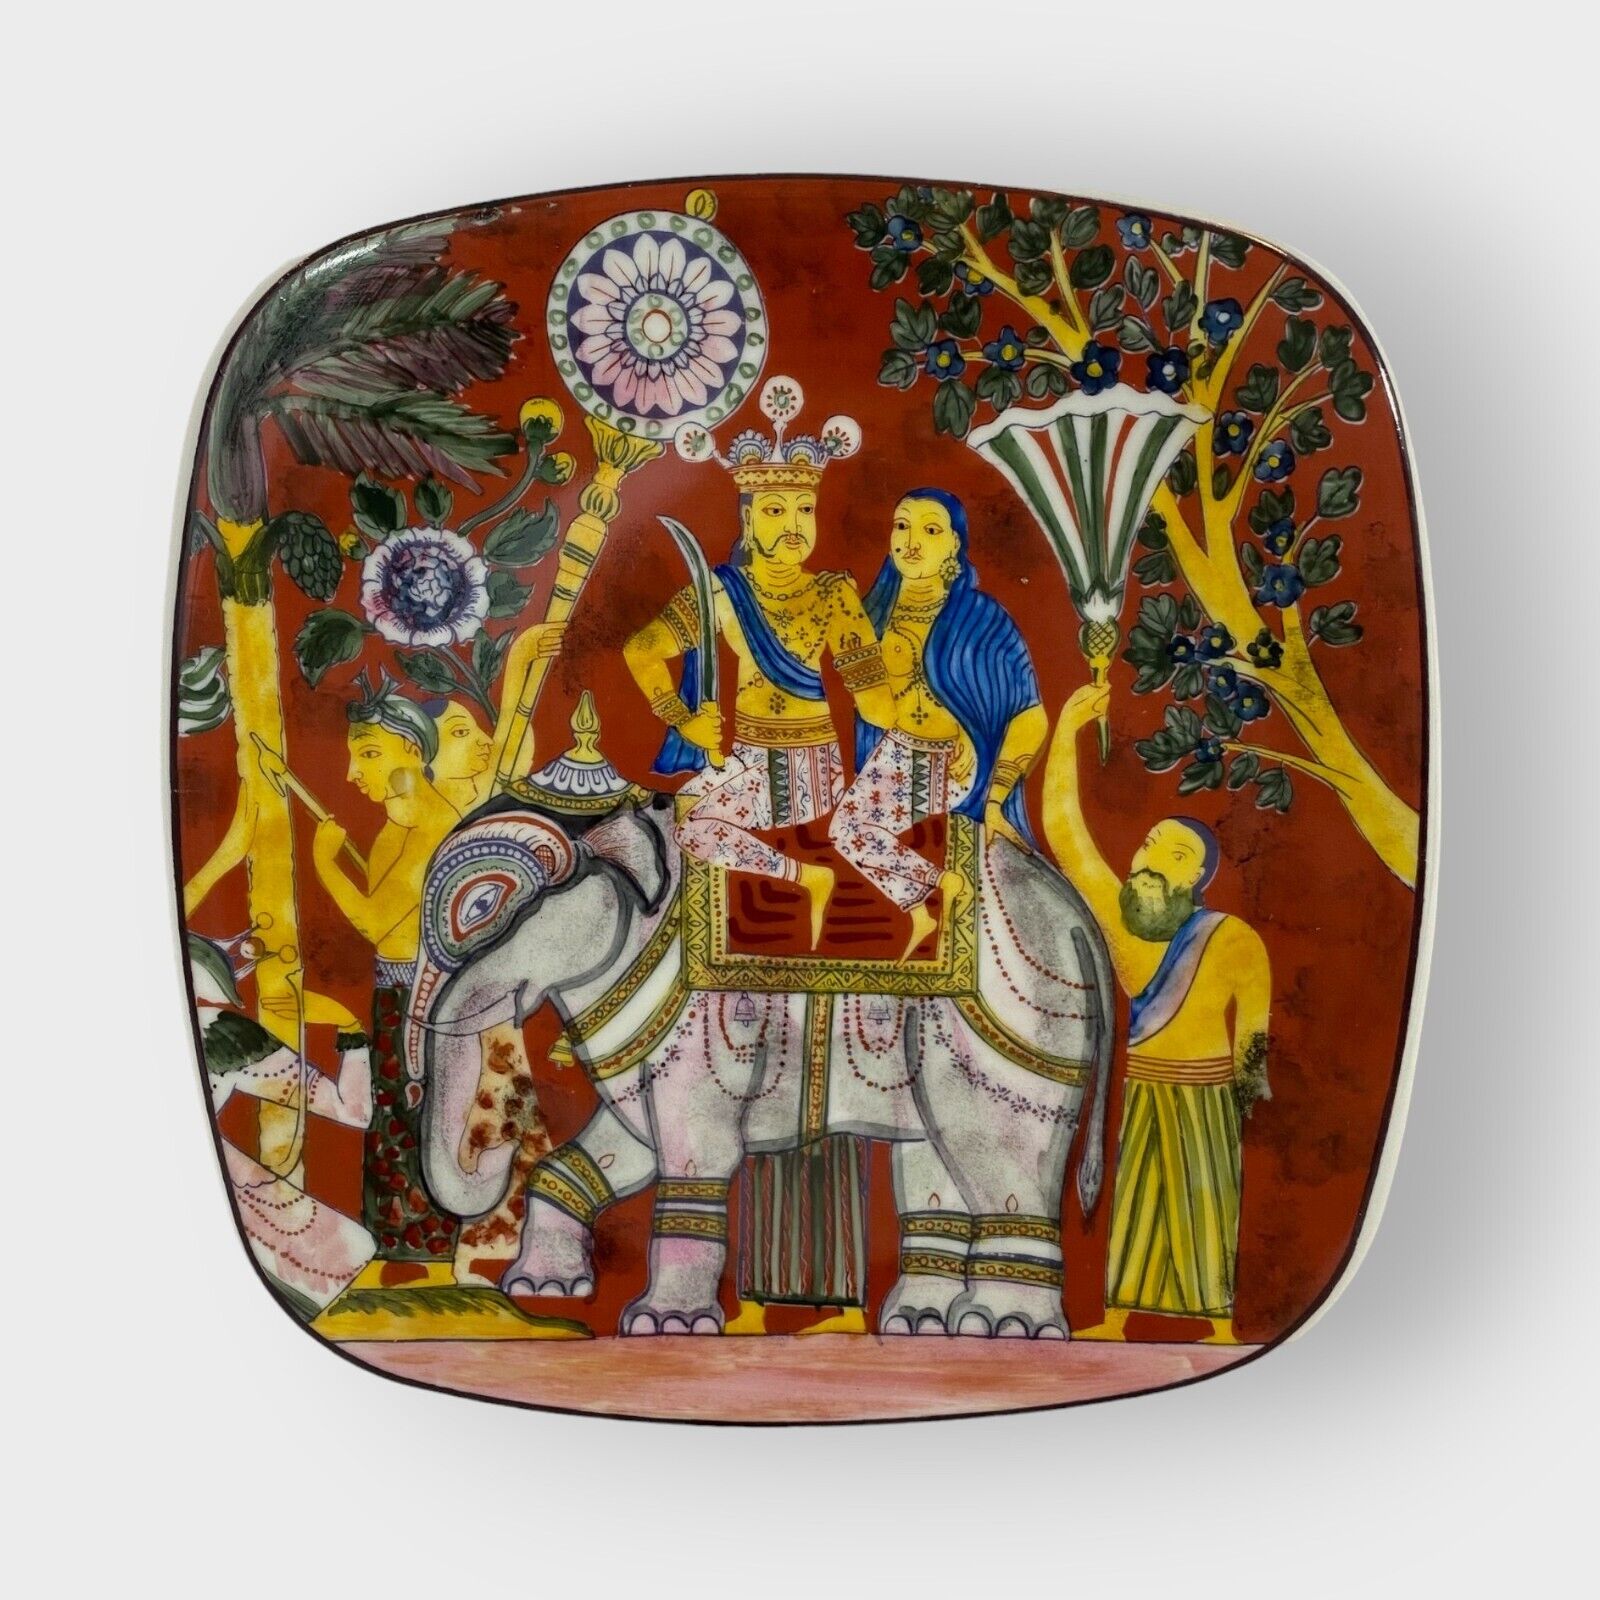 Sri Lankan Hand Painted Ancient Fresco-Mural Plate by Lanka Porcelain